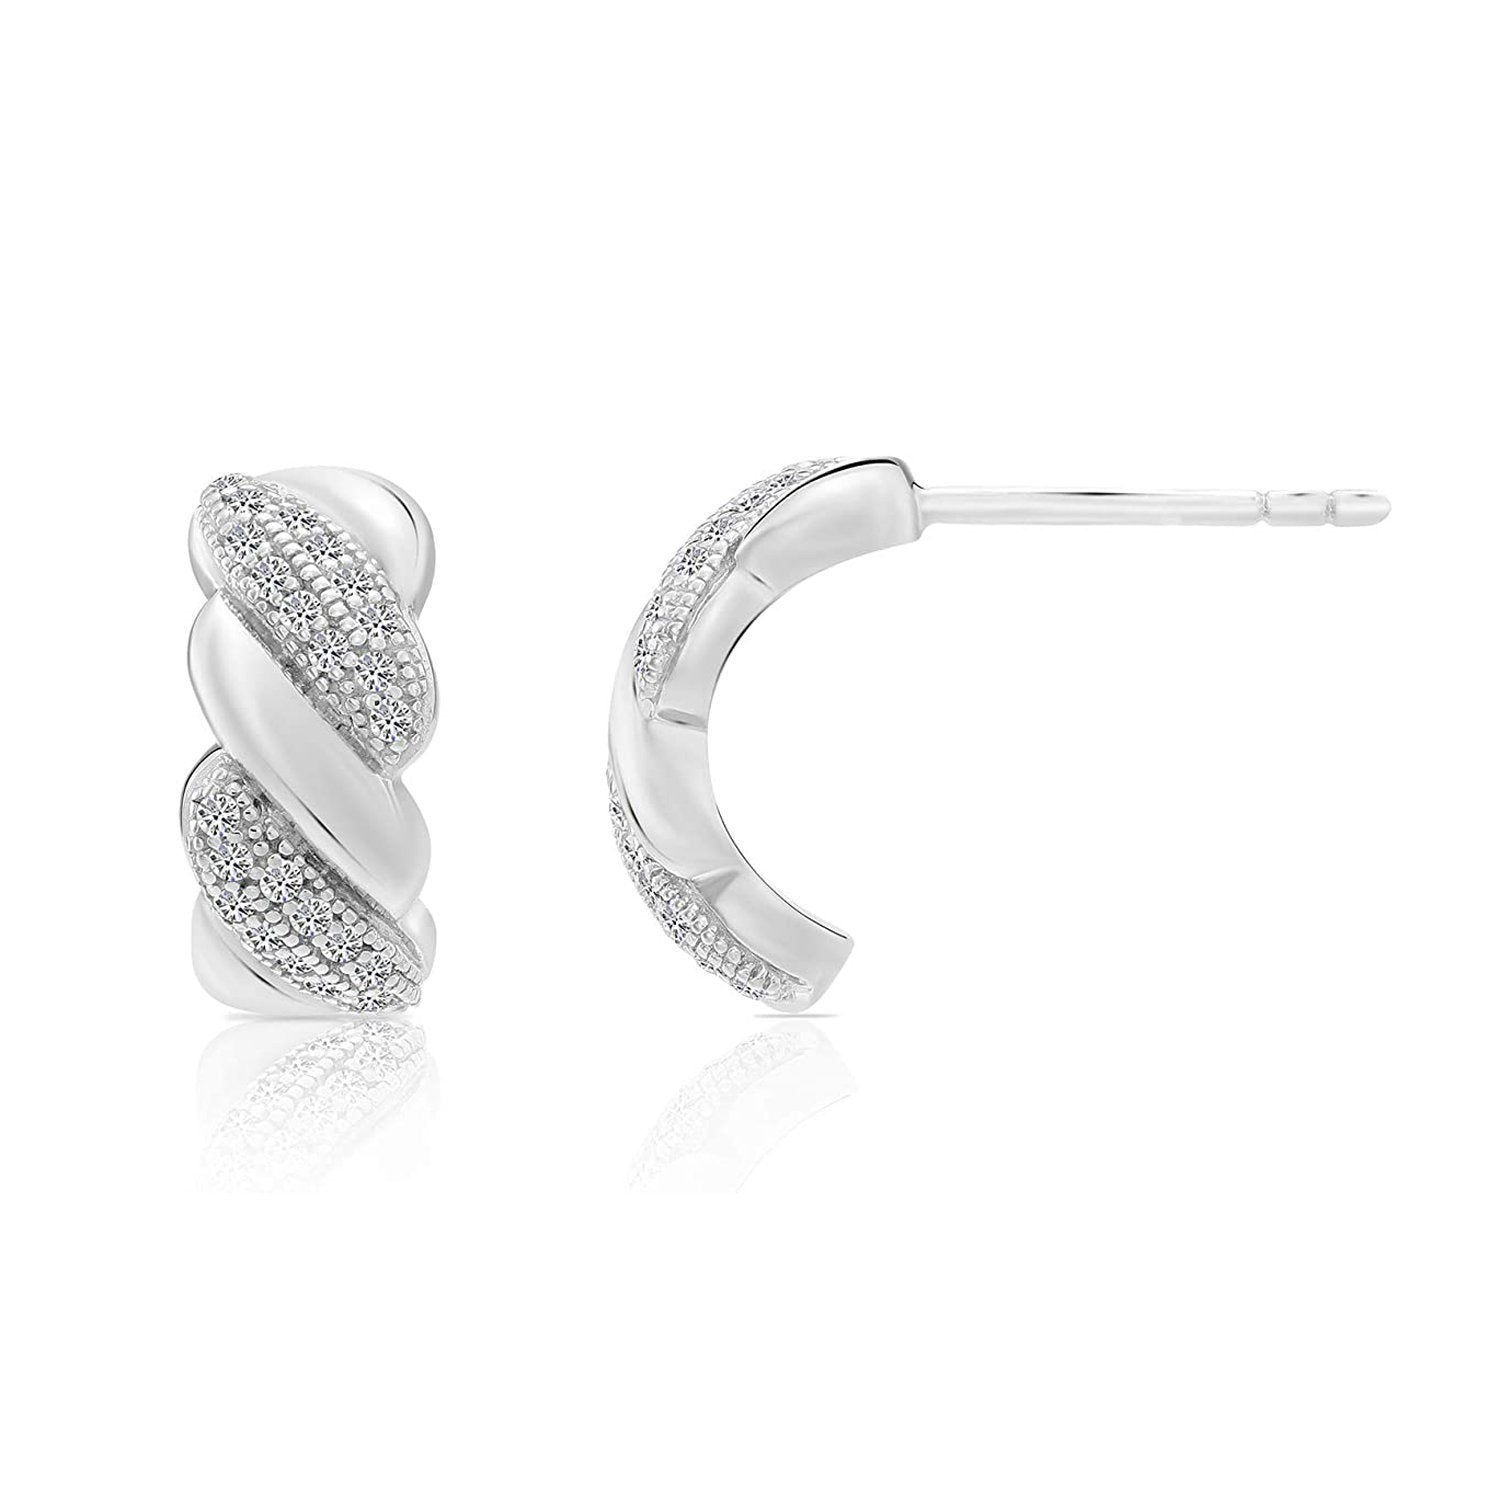 CZ Twisted Rope Stud Earrings in 925 in Sterling Silver